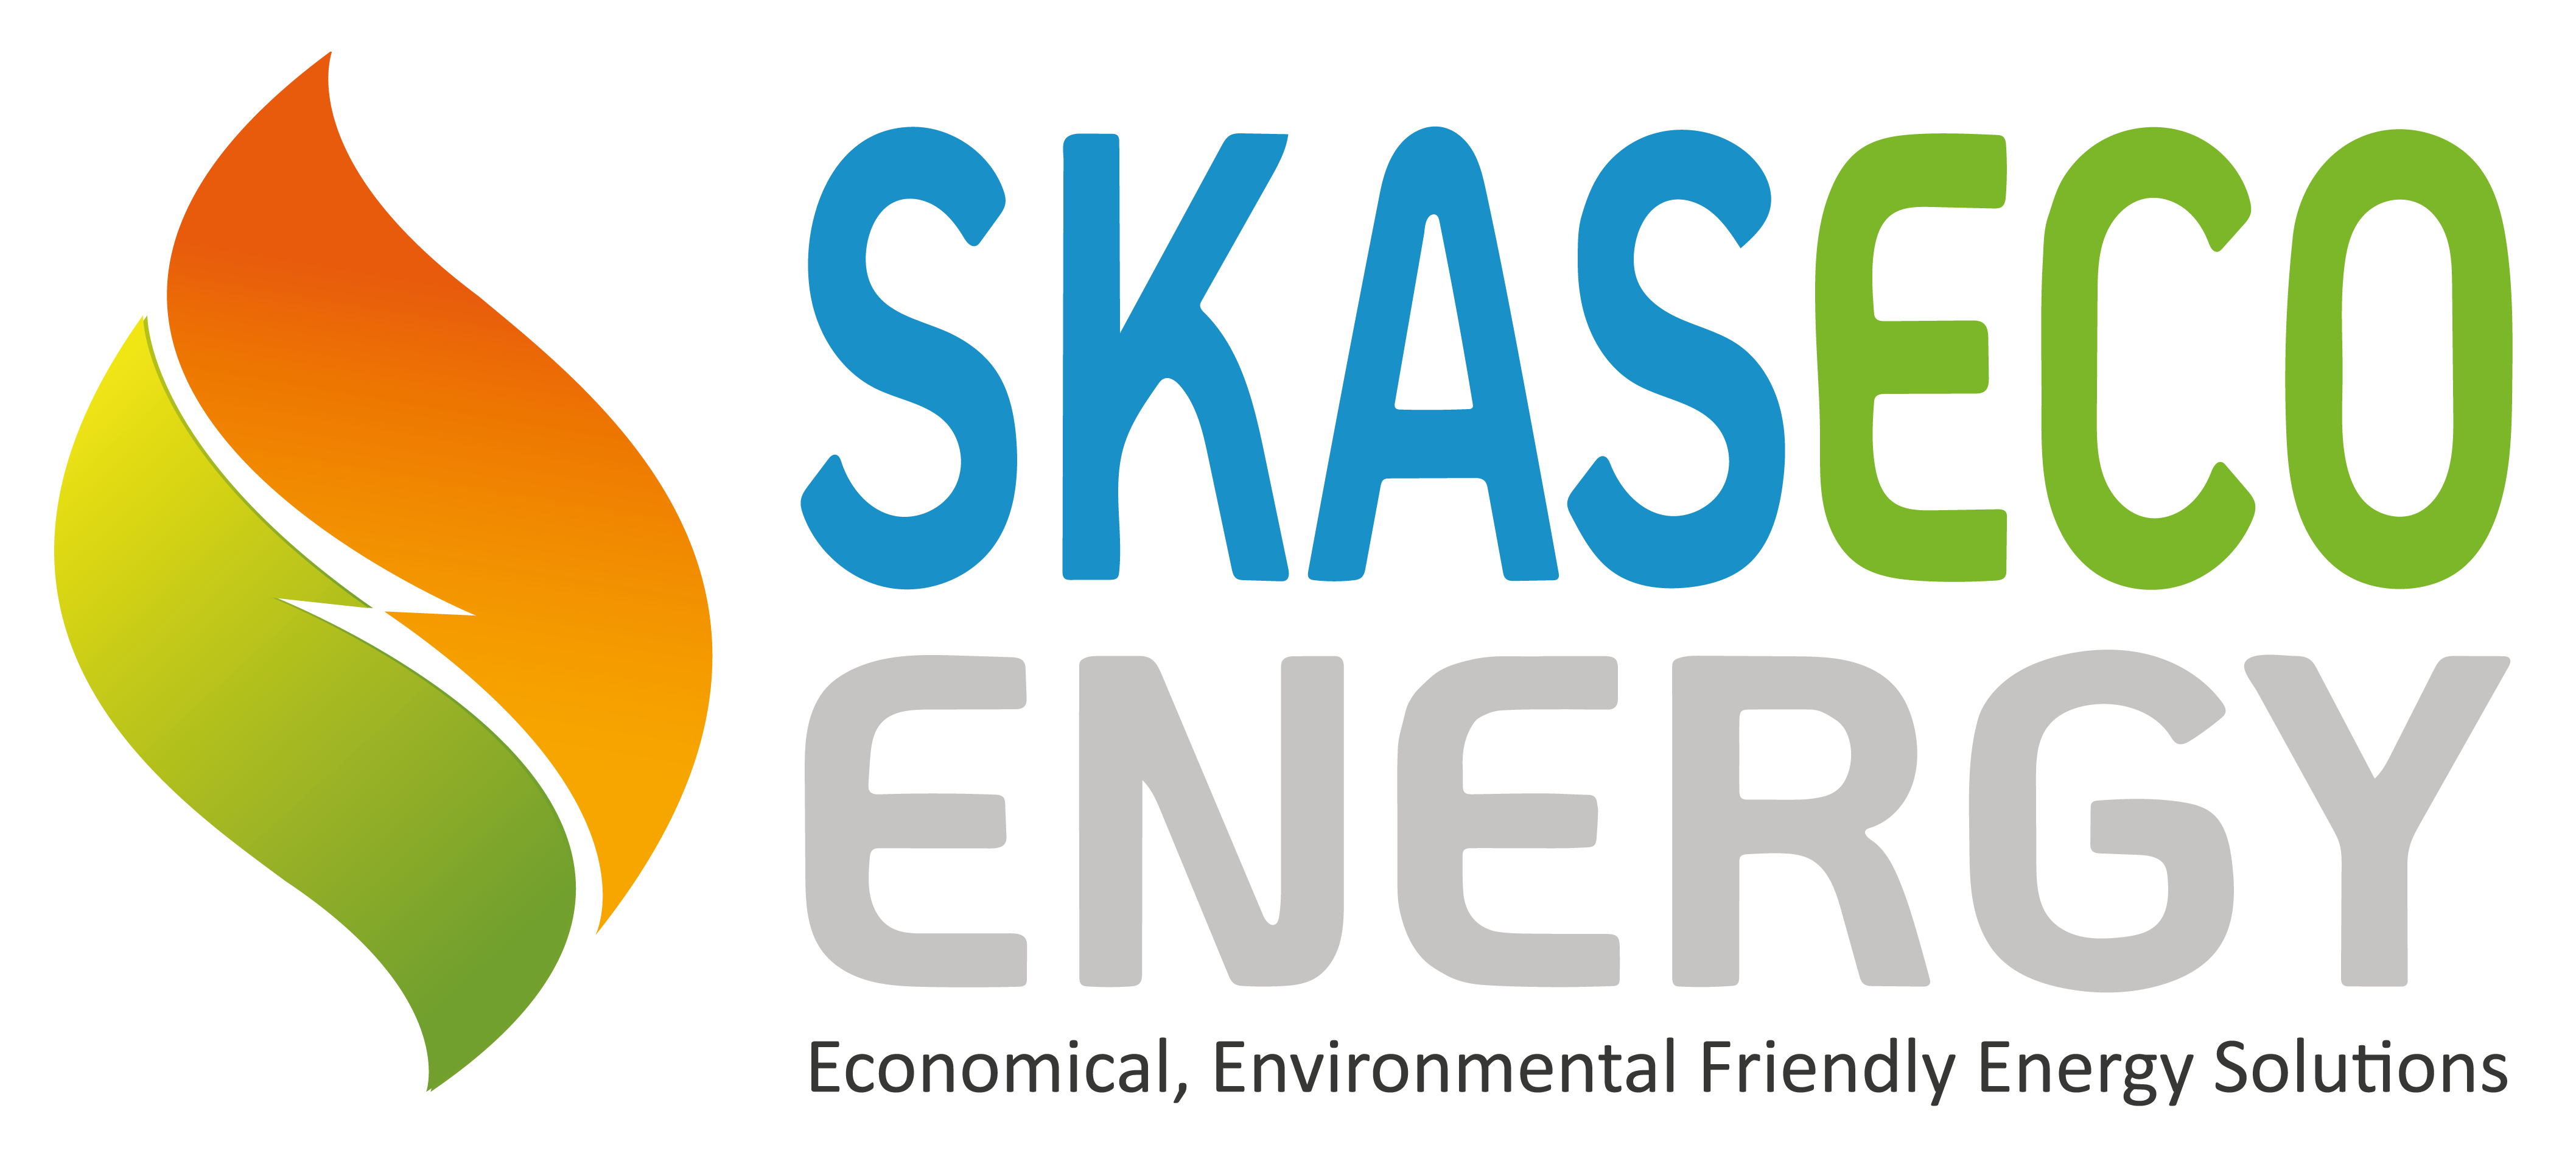 SKASECO Energy